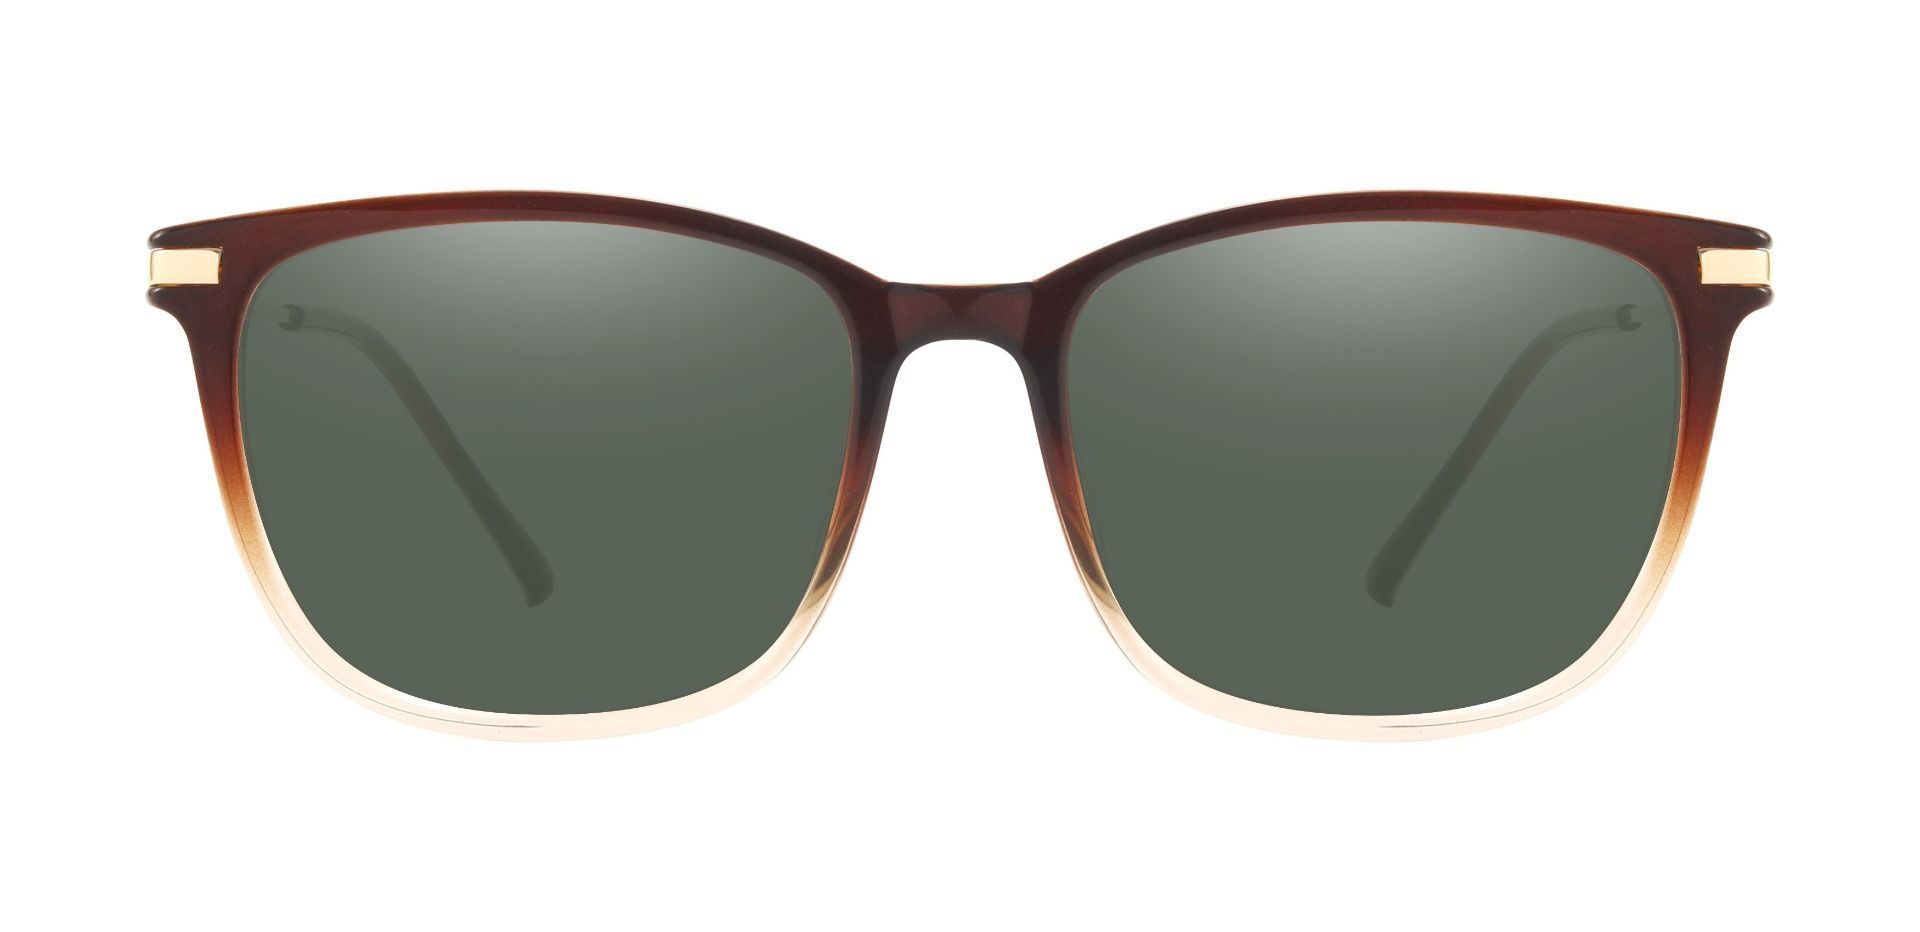 Katie square Prescription Sunglasses - Brown Frame With Green Lenses